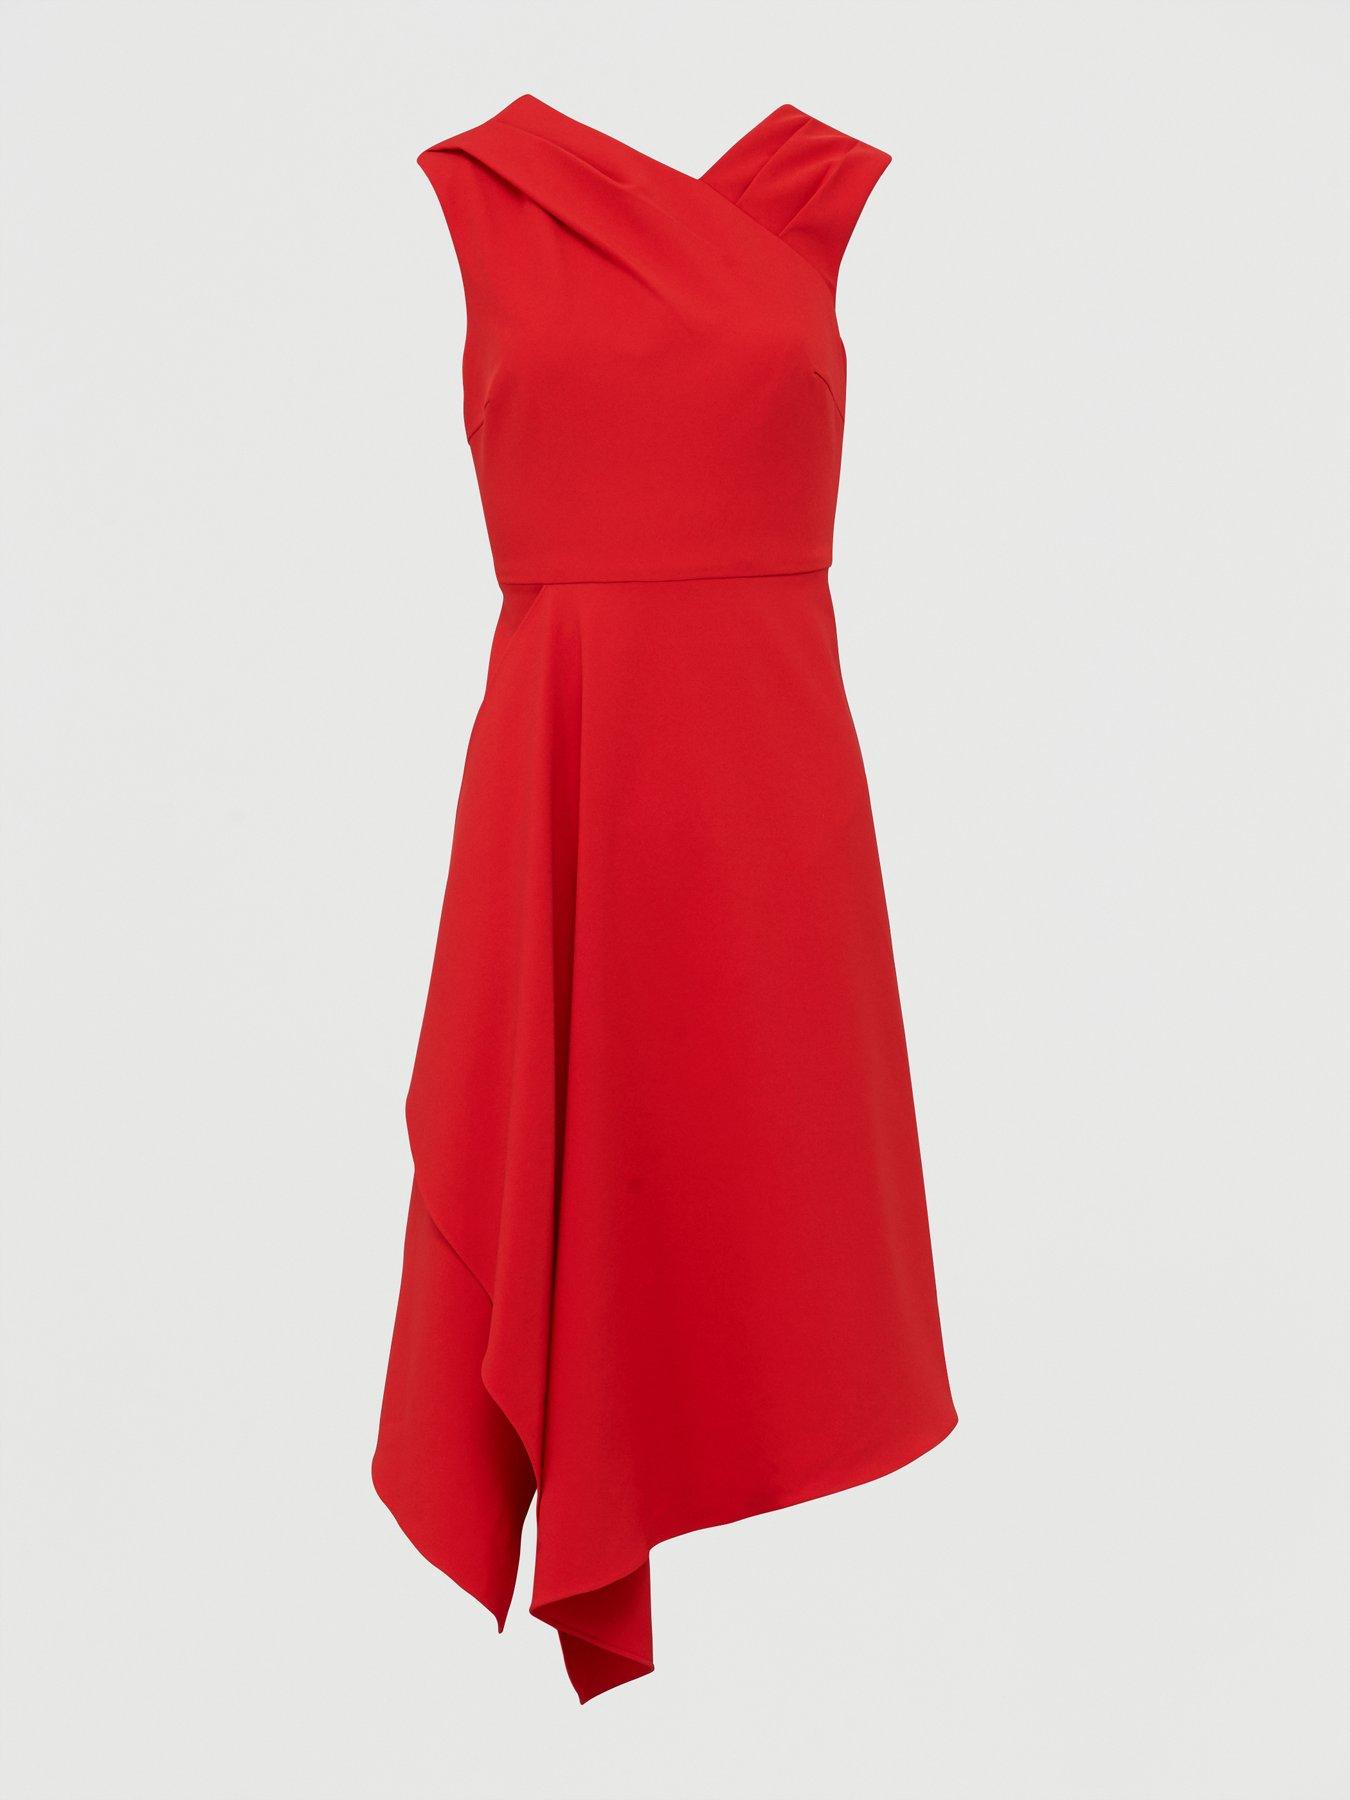 v by very red dress